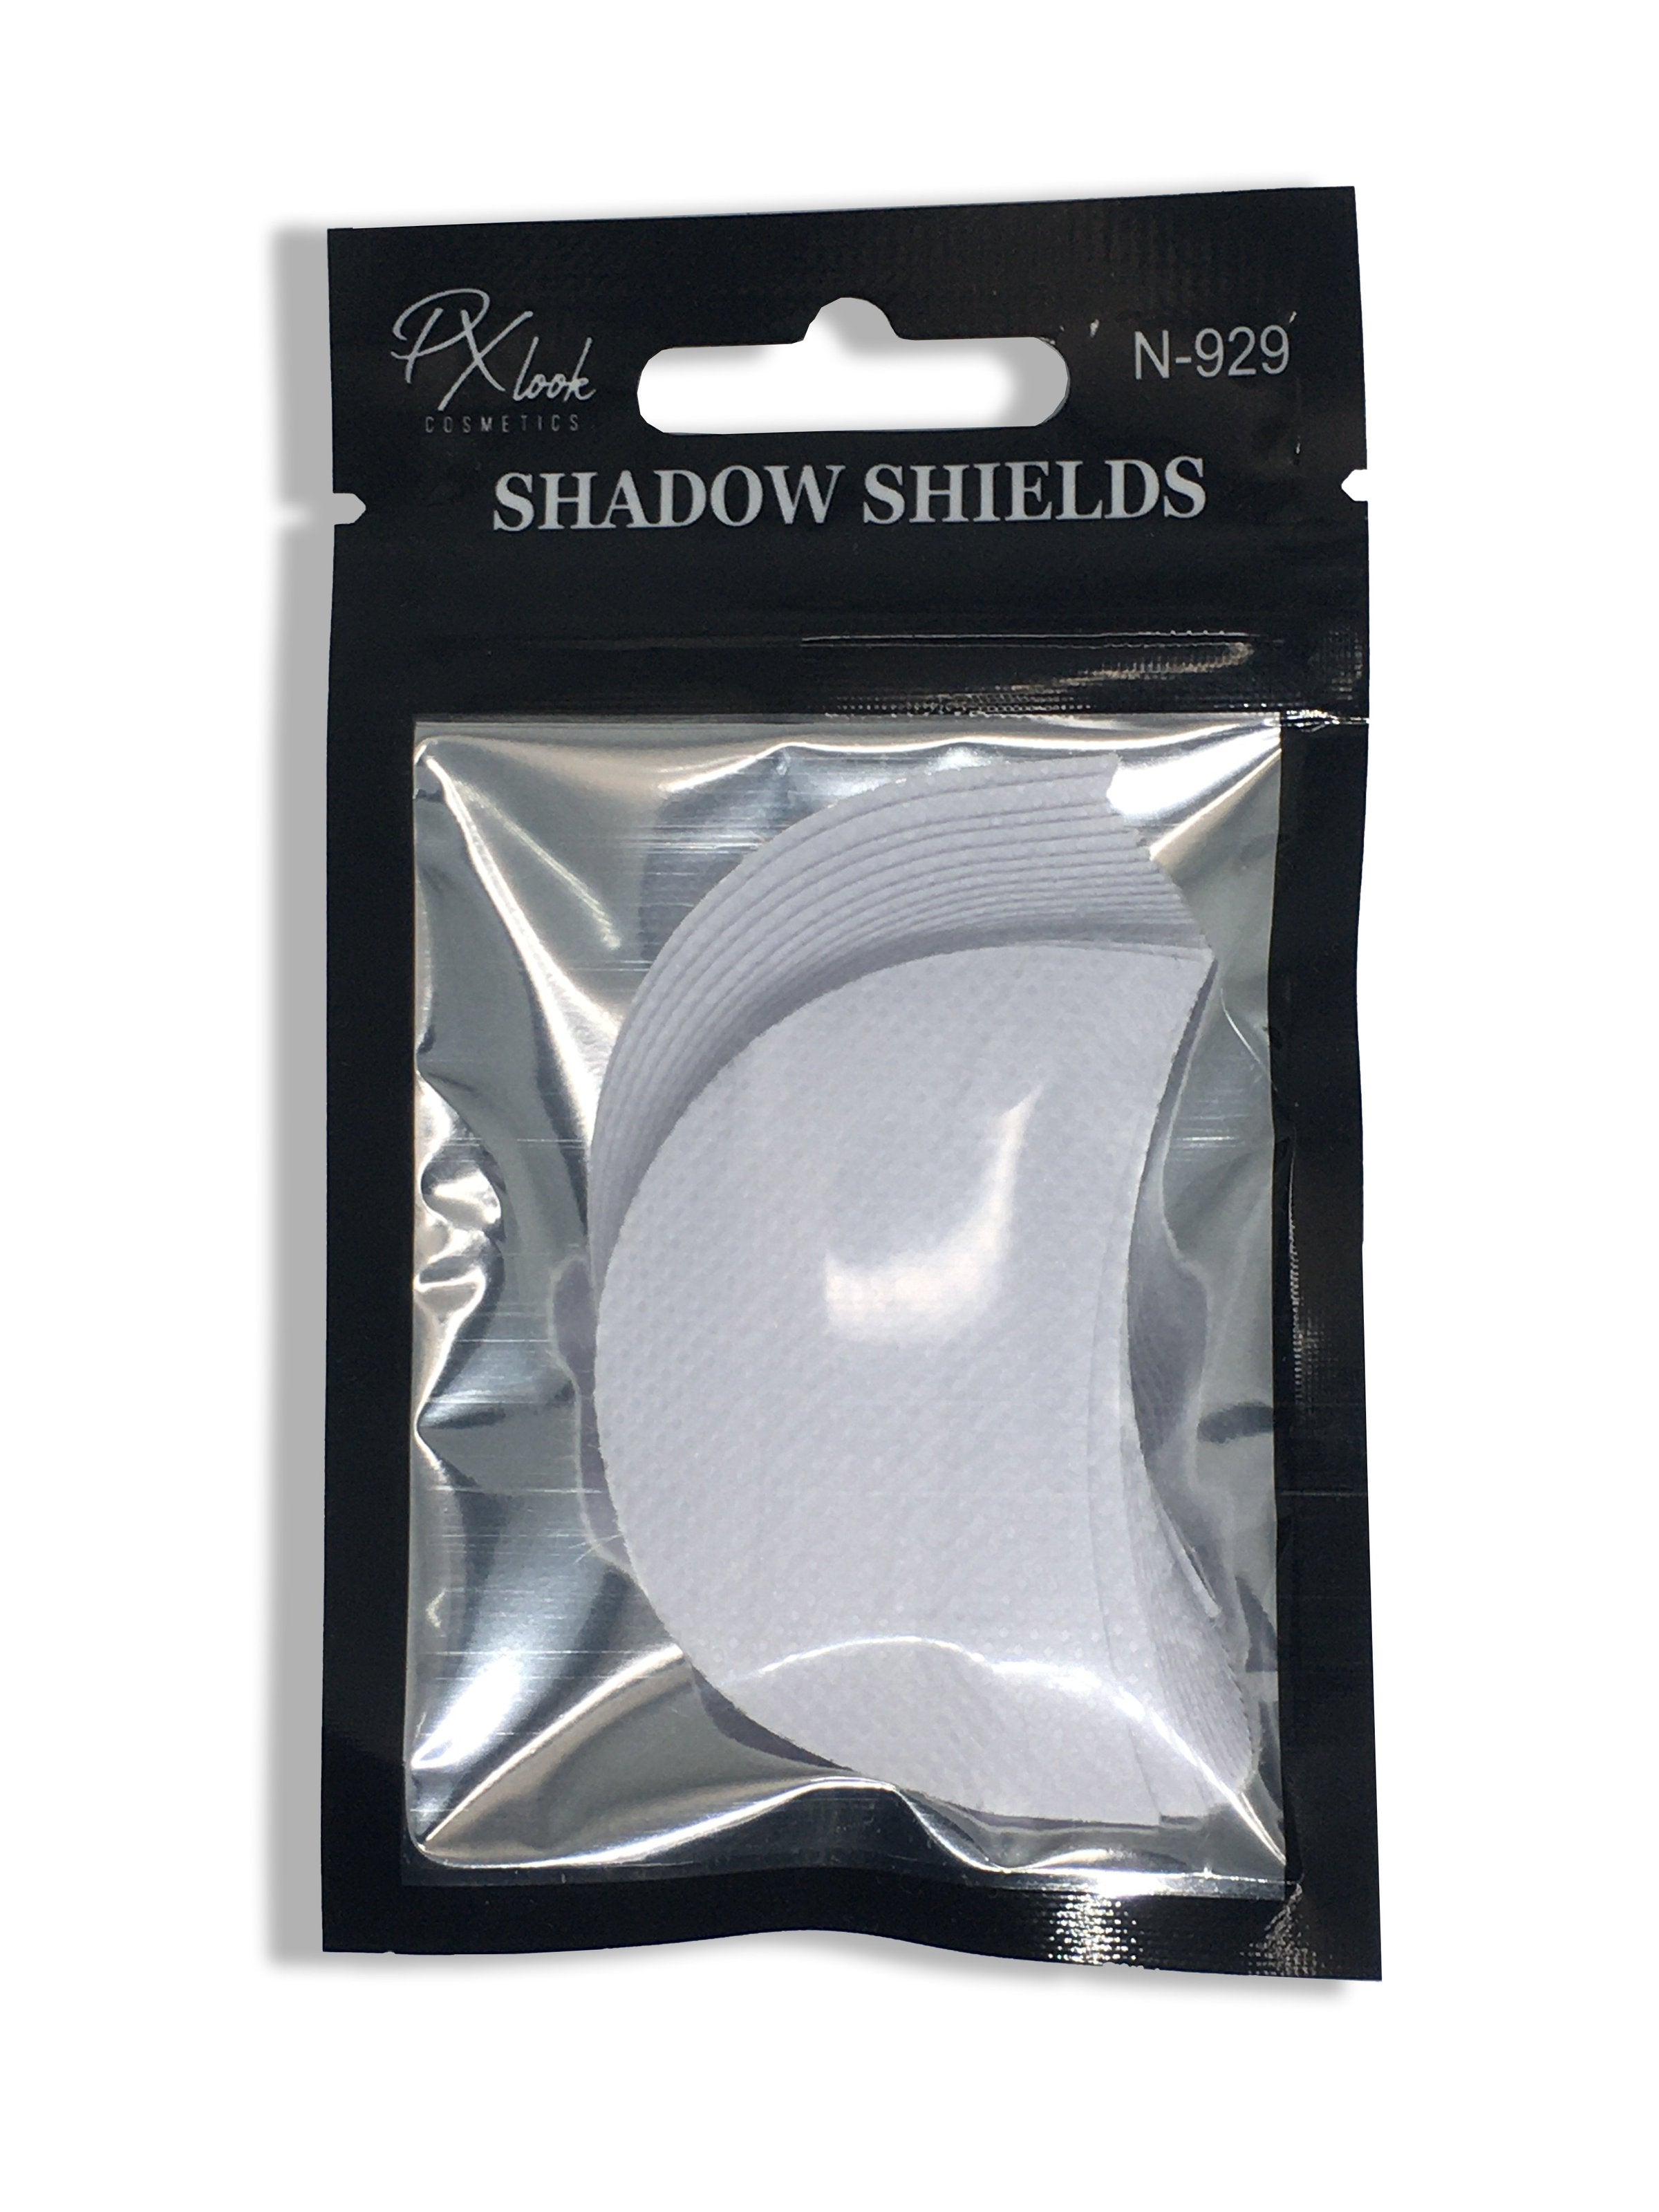 Shadow Shields by PX look Cosmetics